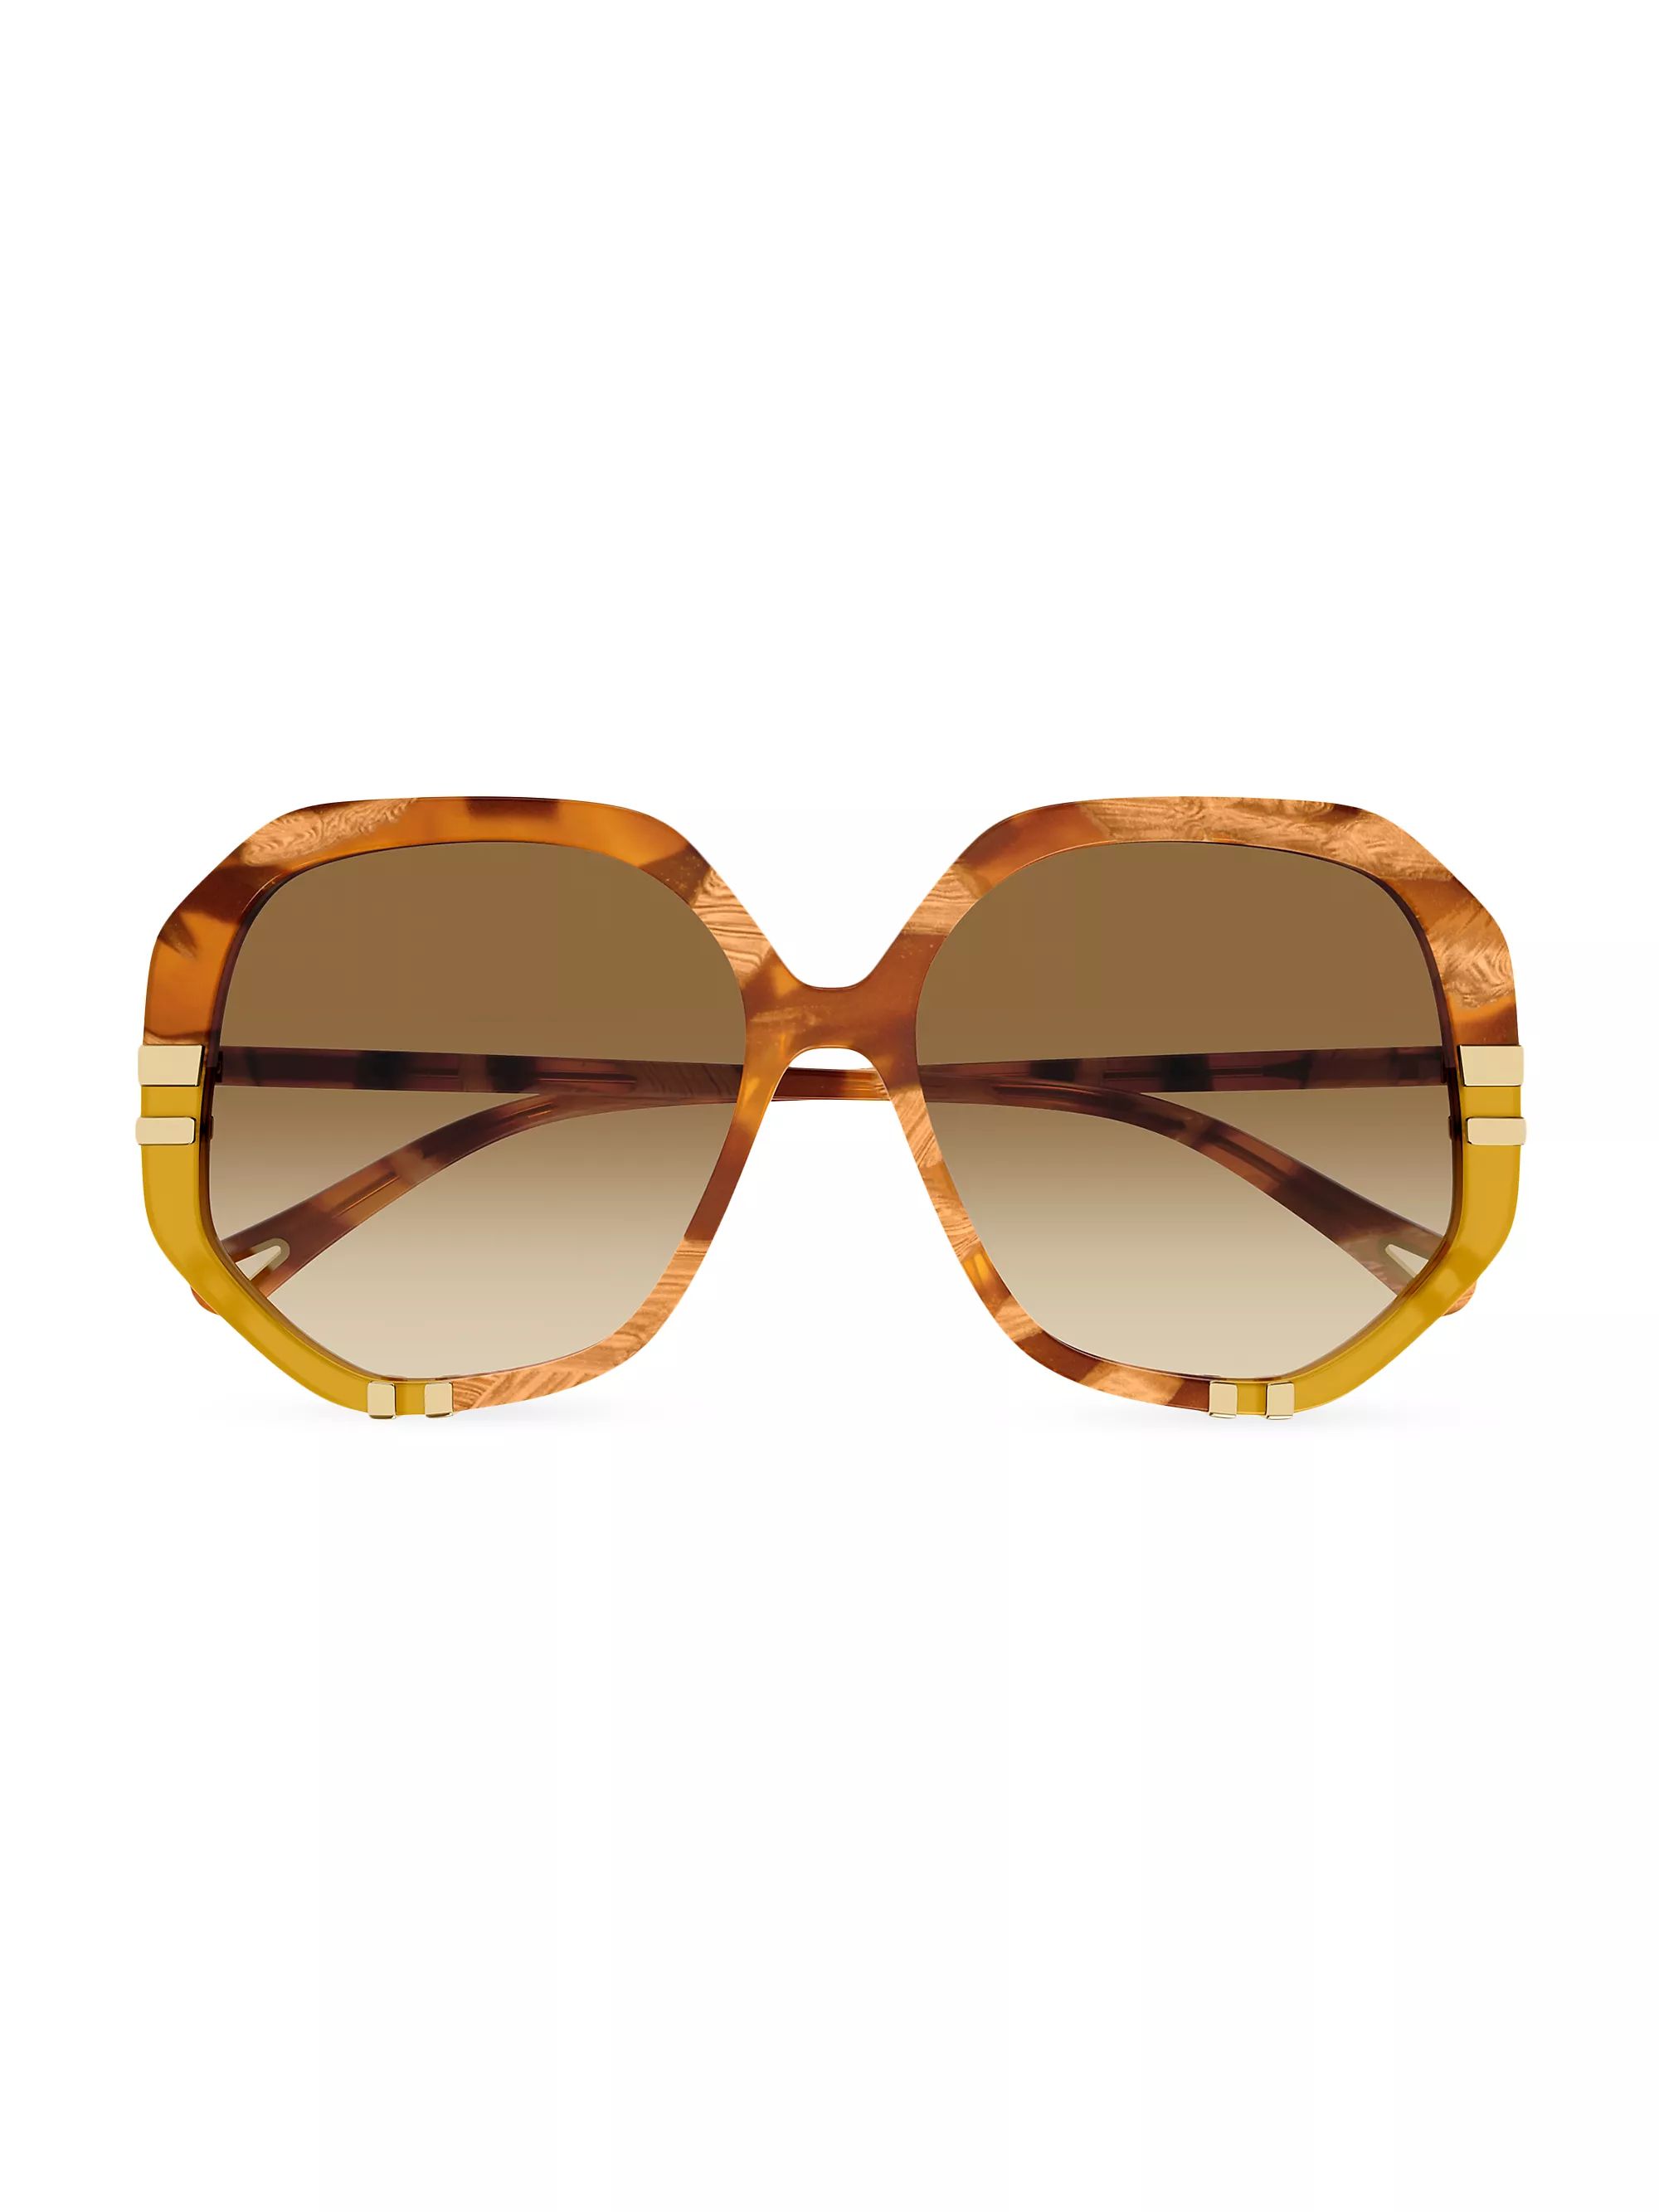 SunglassesRound & OvalChloéWest 55MM Acetate Geometric Sunglasses$445 | Saks Fifth Avenue